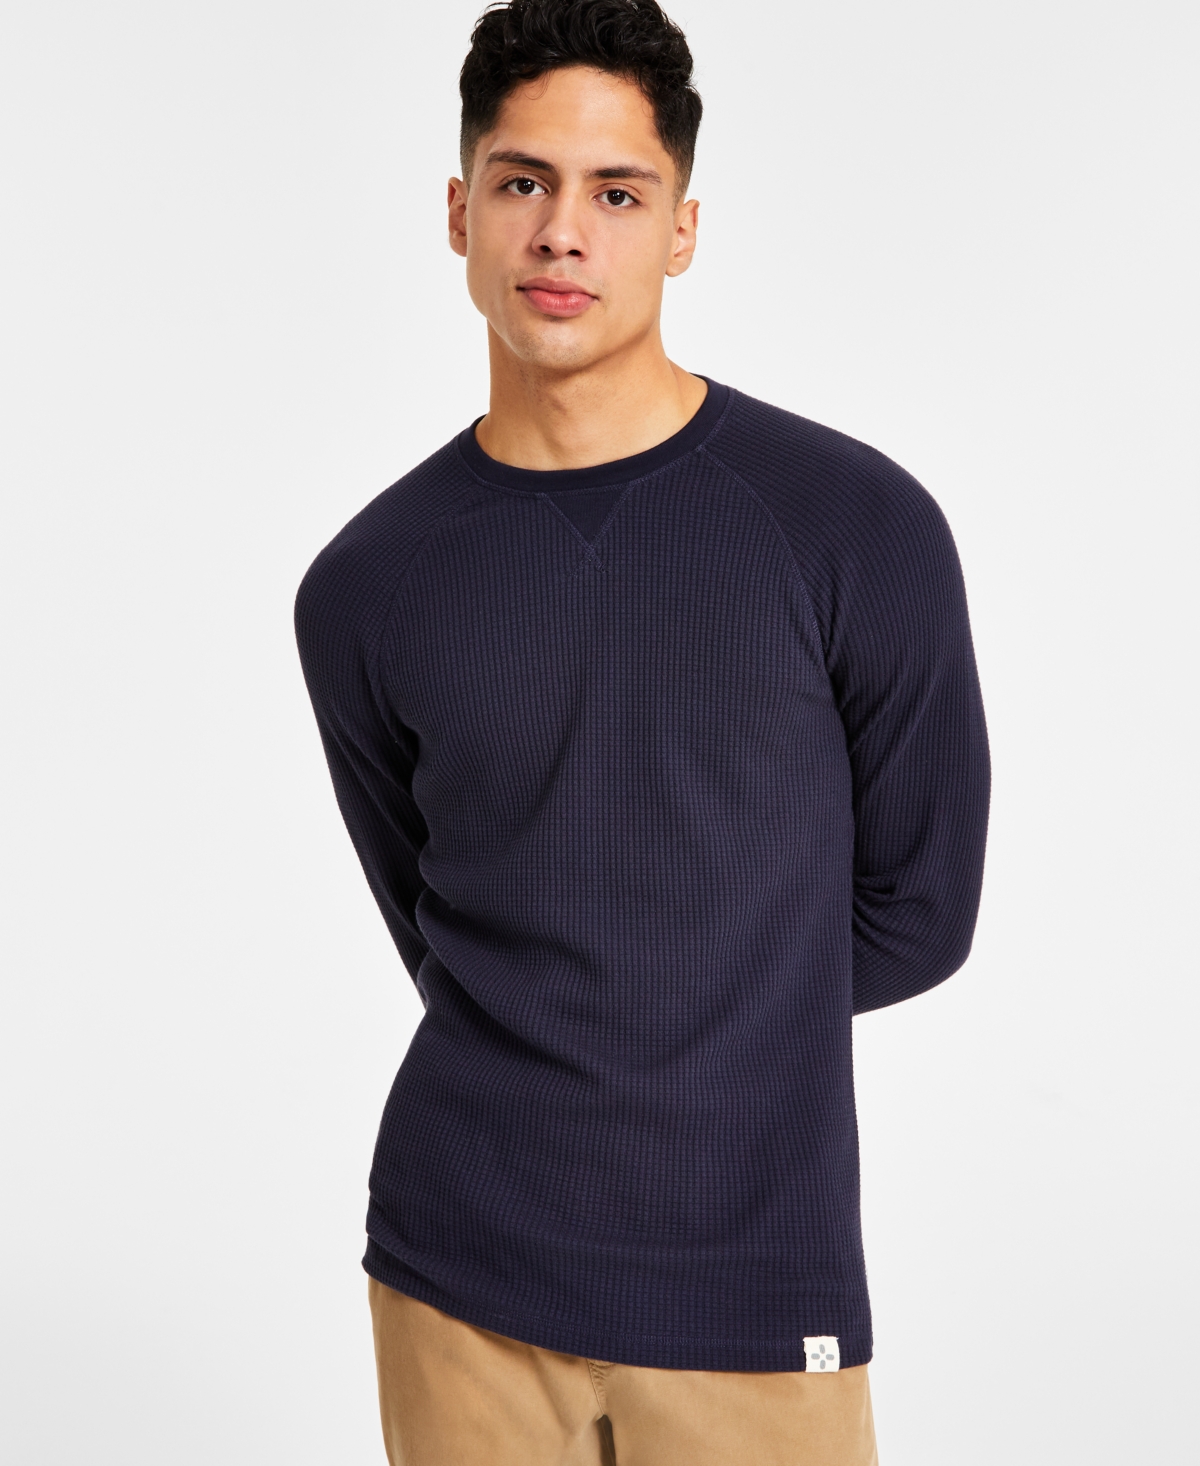 Men's Long-Sleeve Thermal Shirt, Created for Macy's - Dark Scarlet